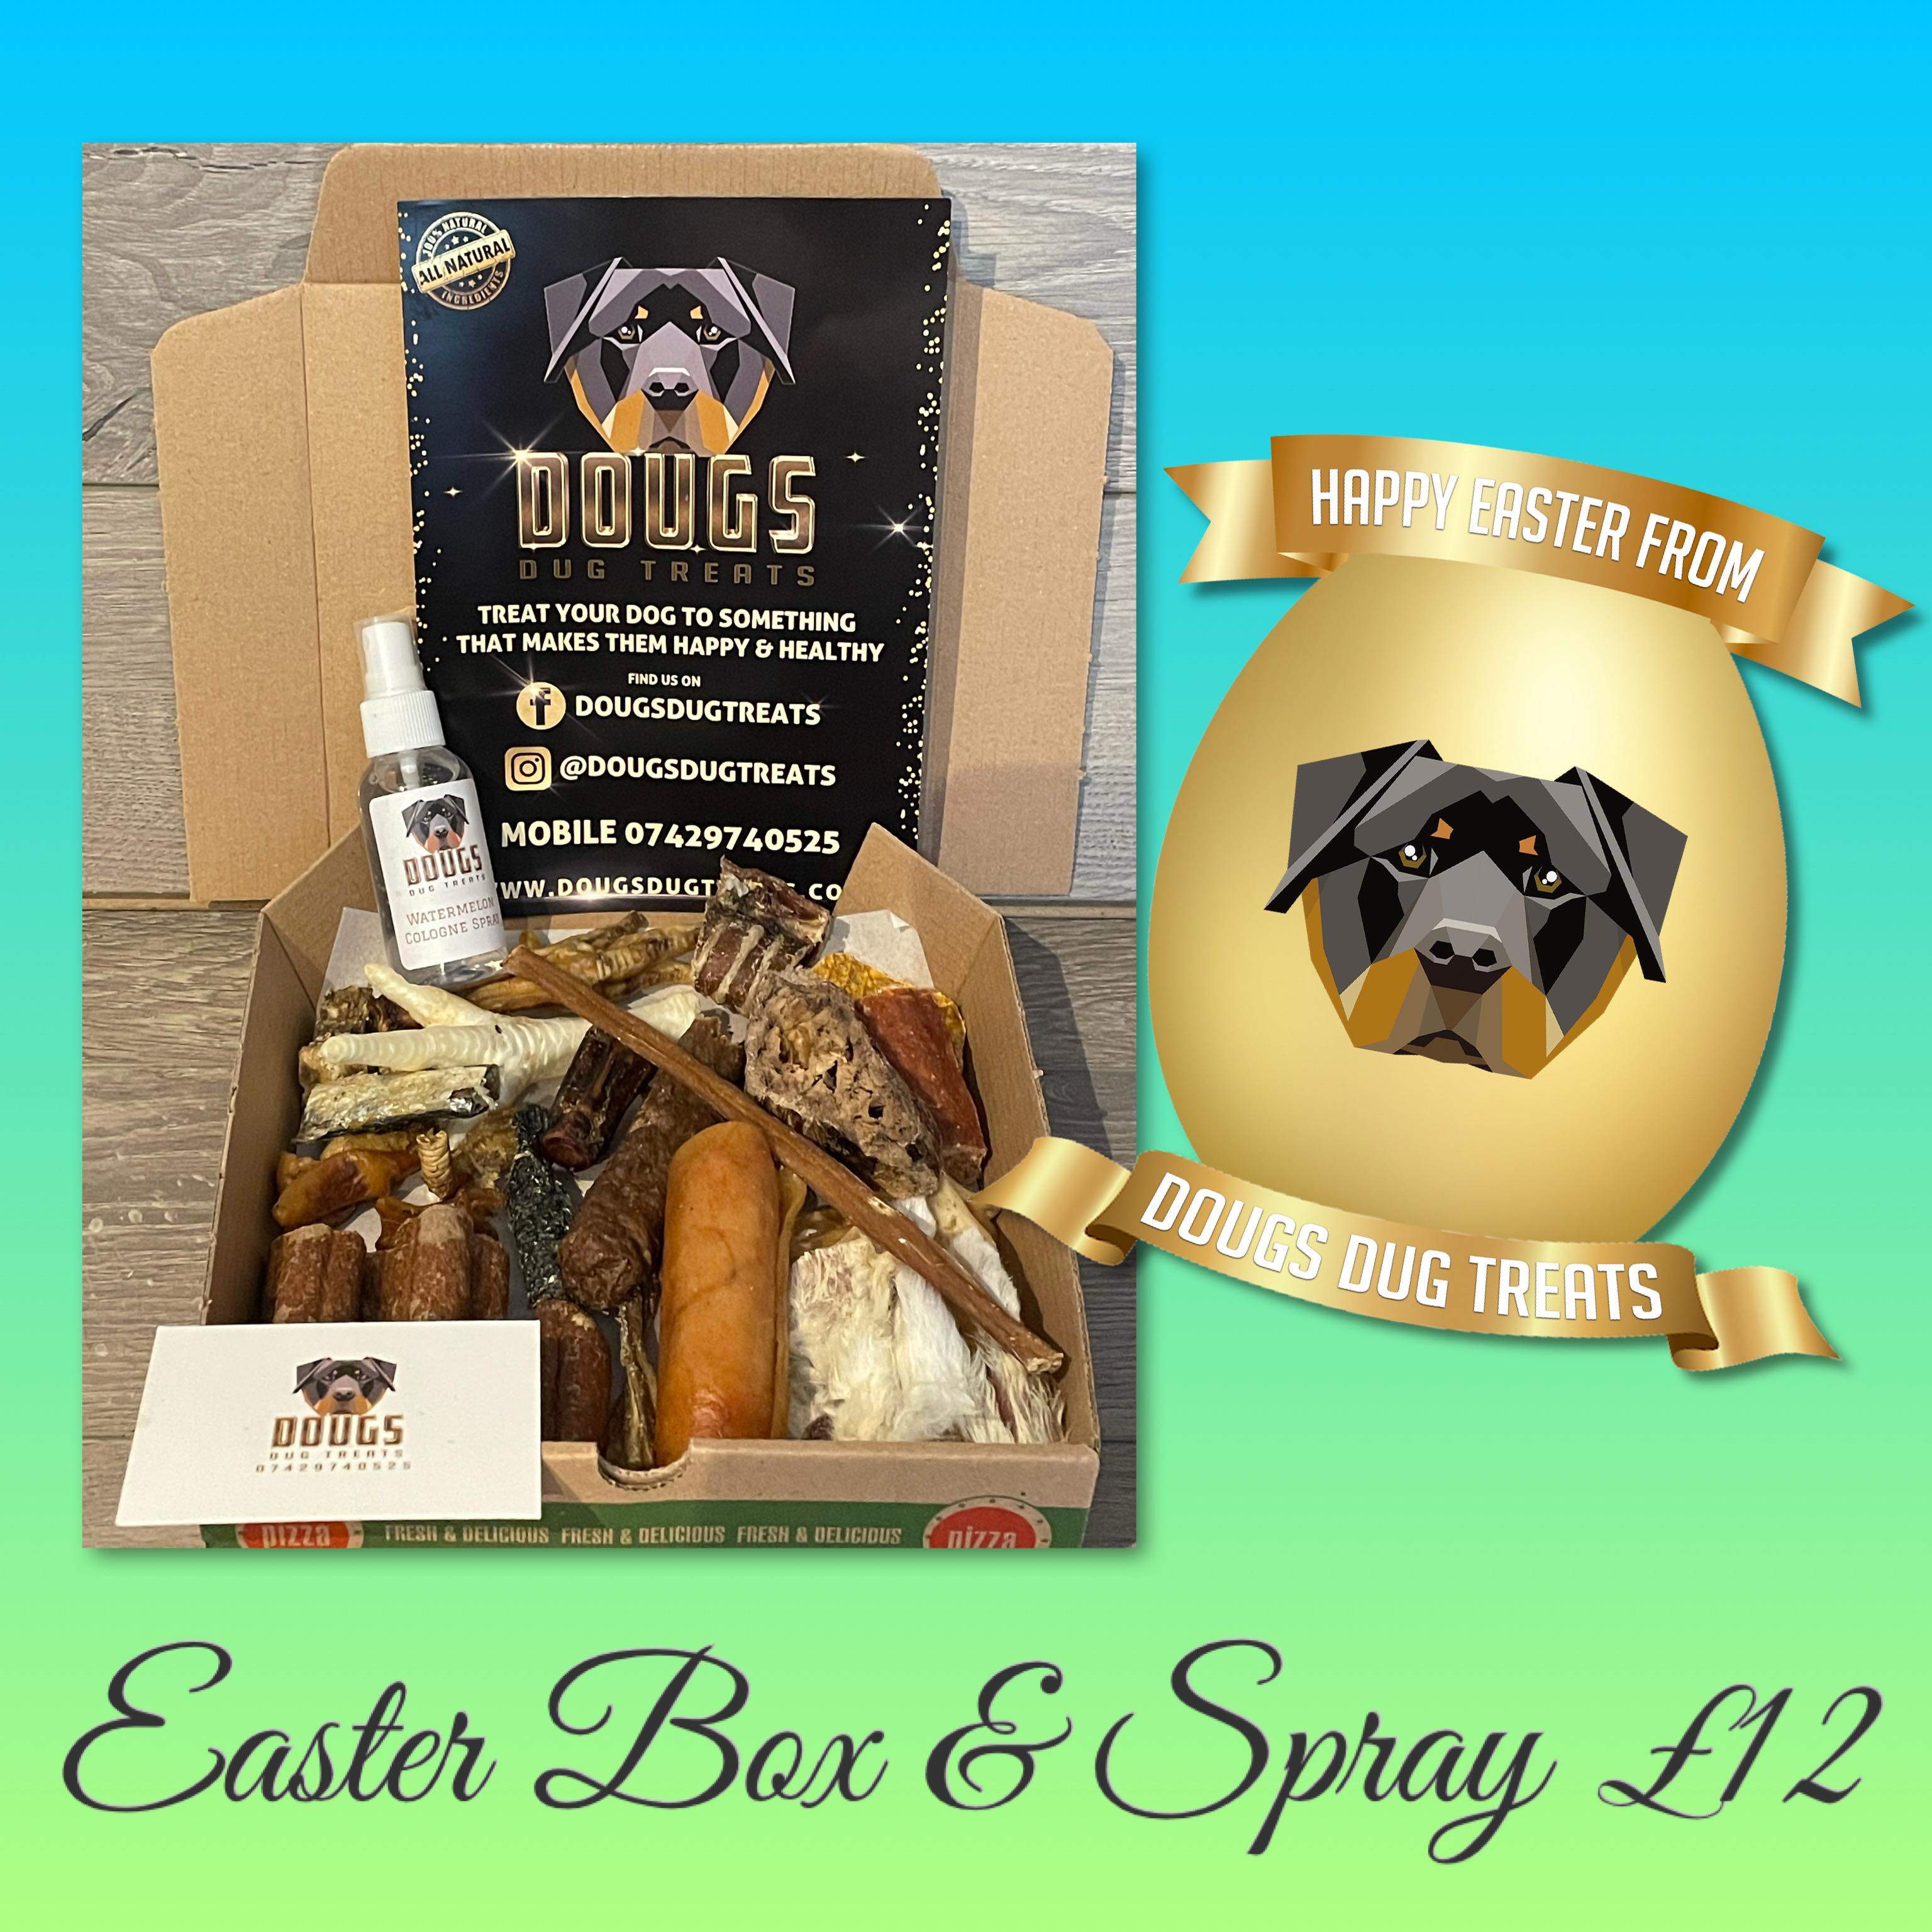 Easter Selection Box and Dog Spray